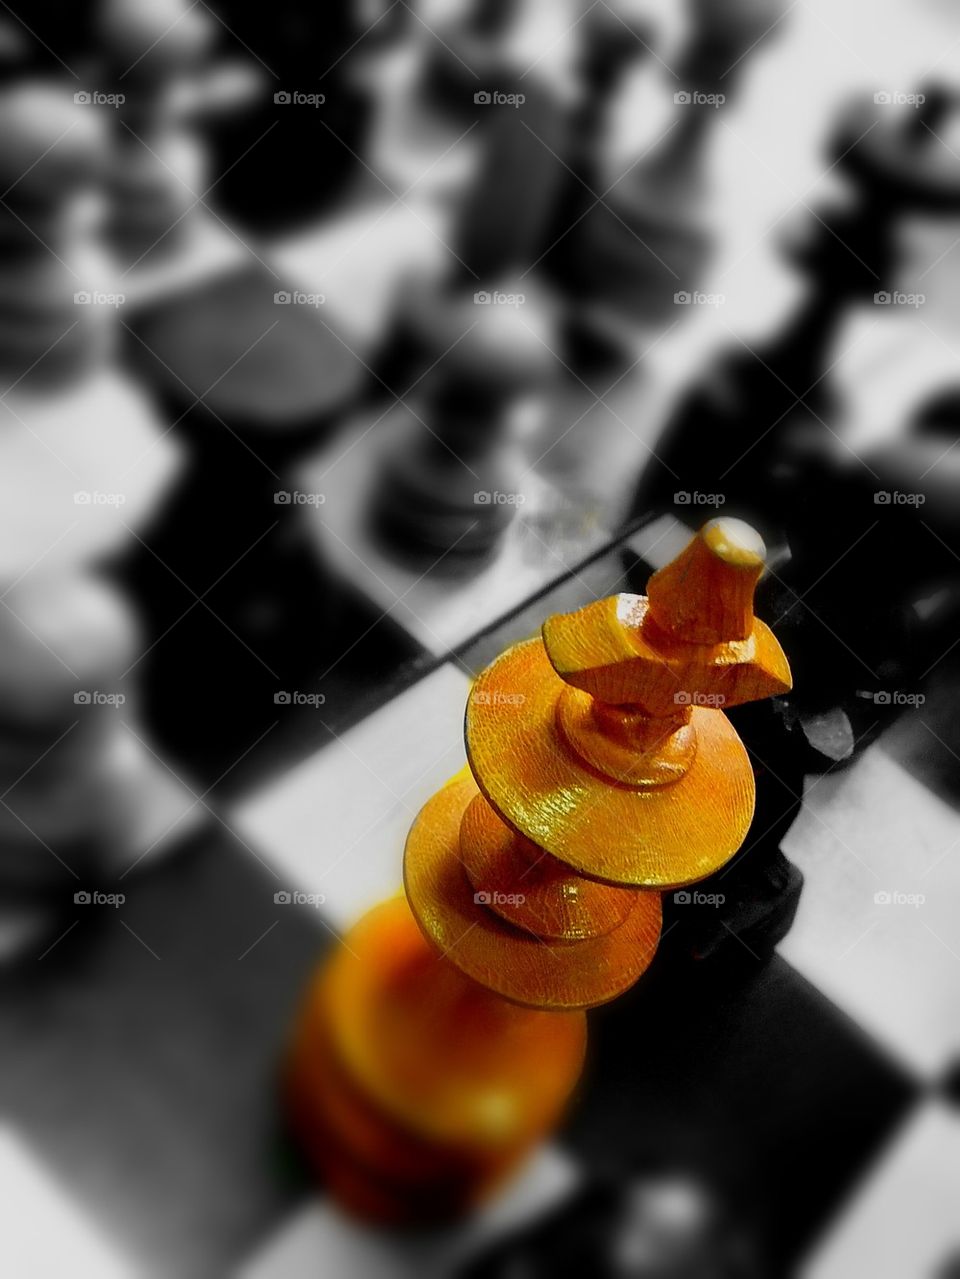 Chess piece king